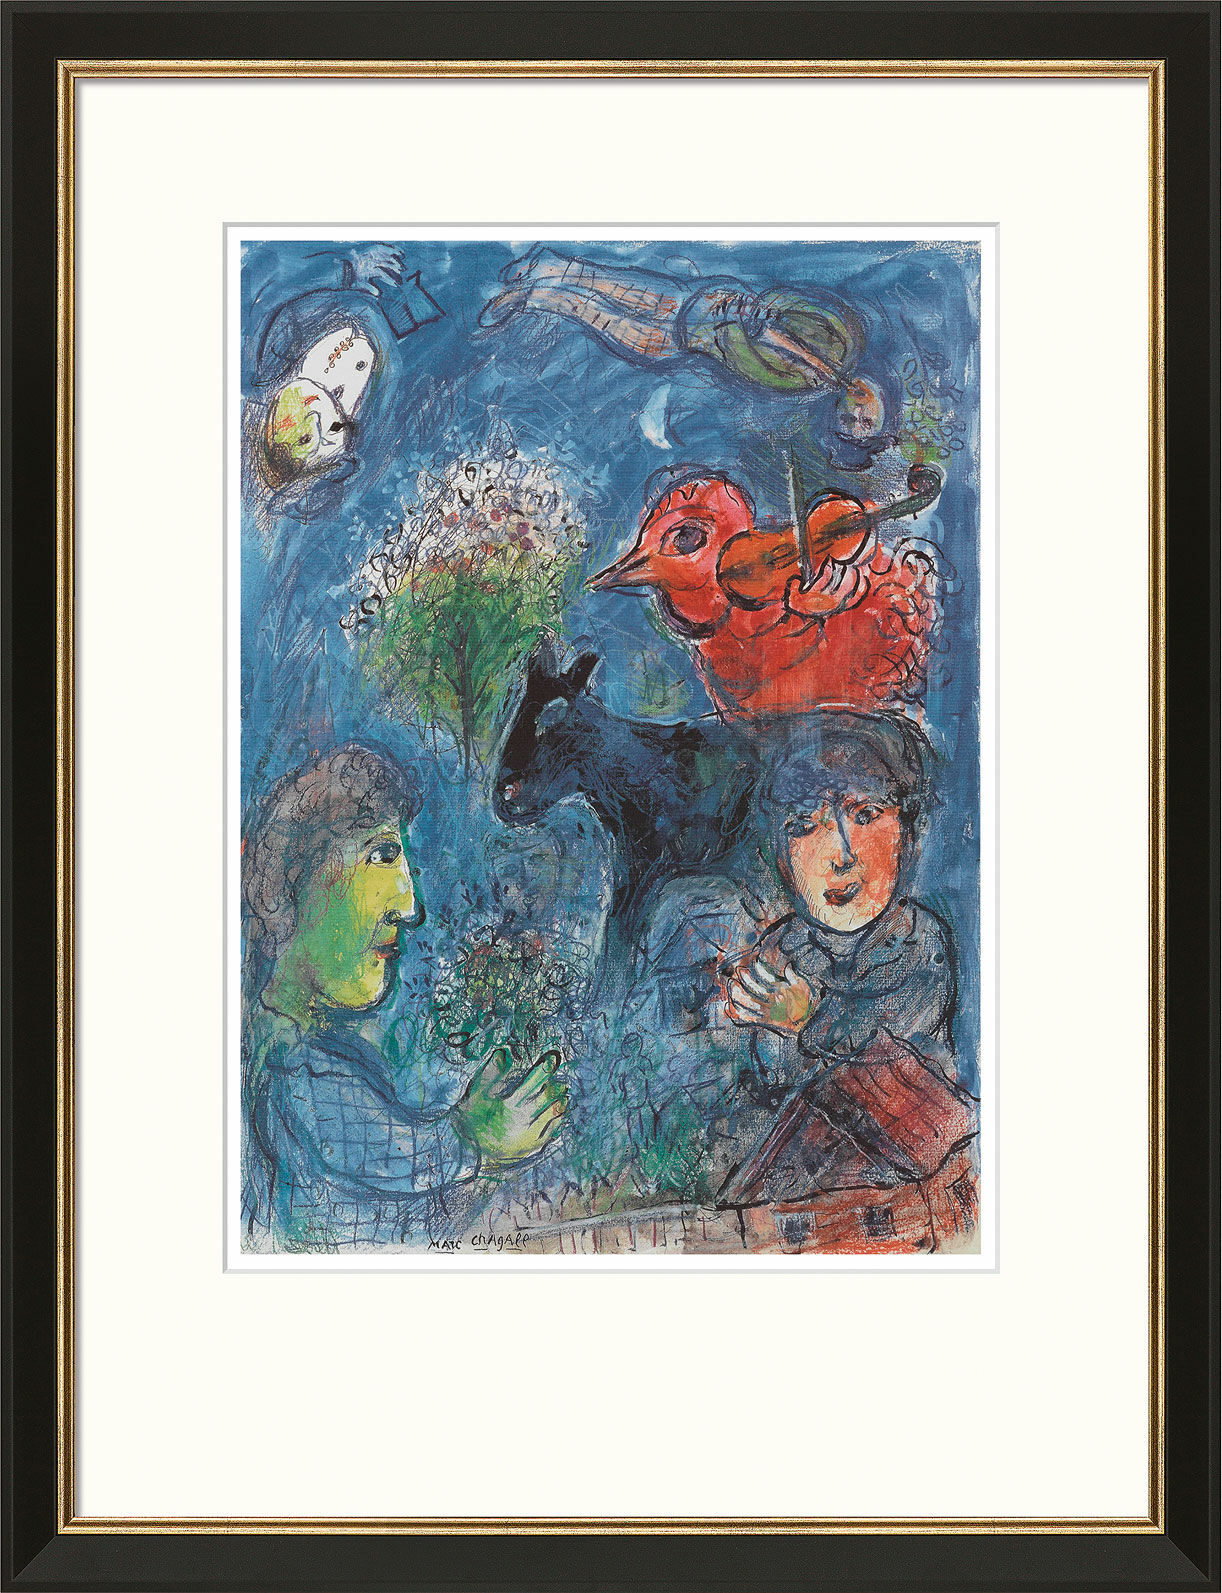 Billede "L'été", indrammet von Marc Chagall